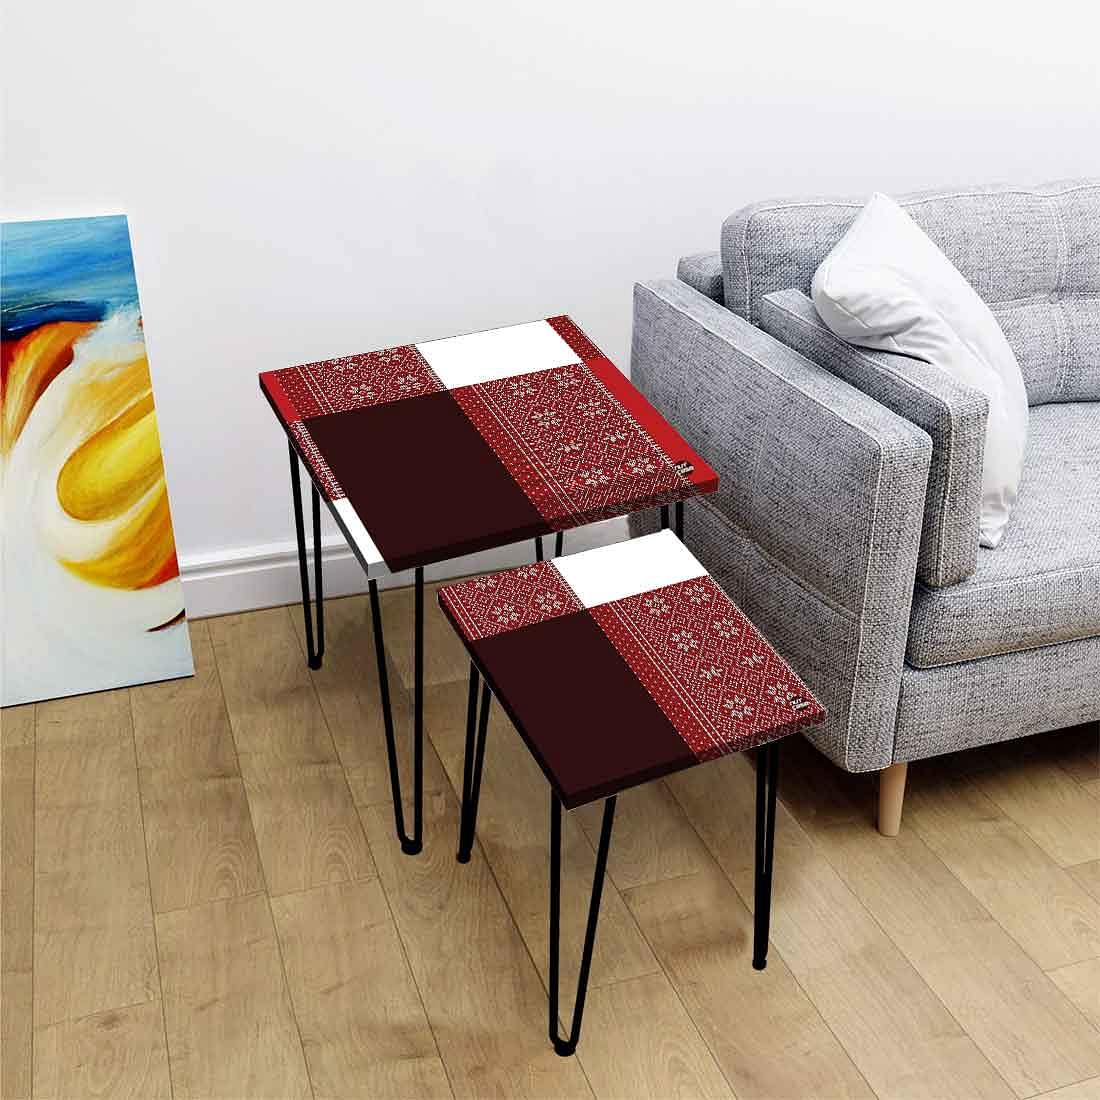 Large & Medium Sized Set of 2 Nesting Table for living Room - Box Pattern Nutcase